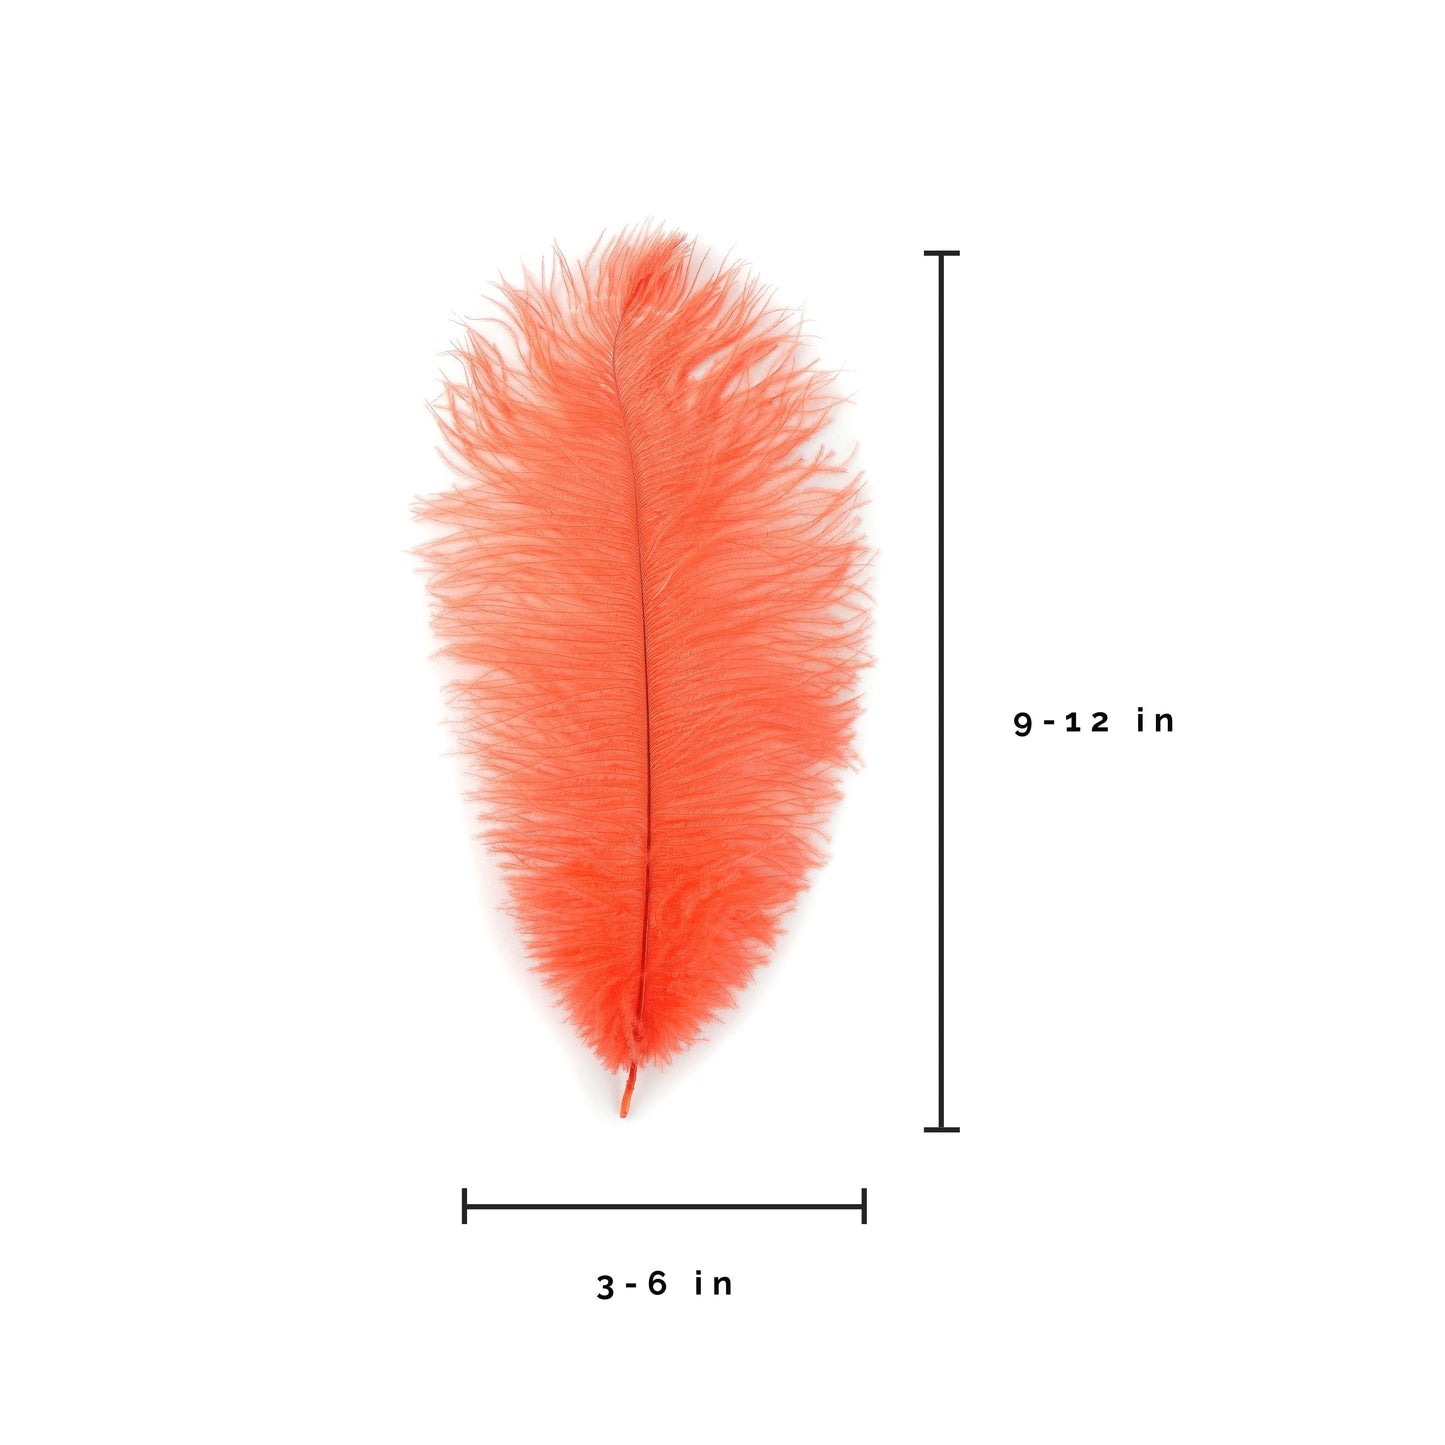 Ostrich Feathers 9-12" Drabs - Hot Orange